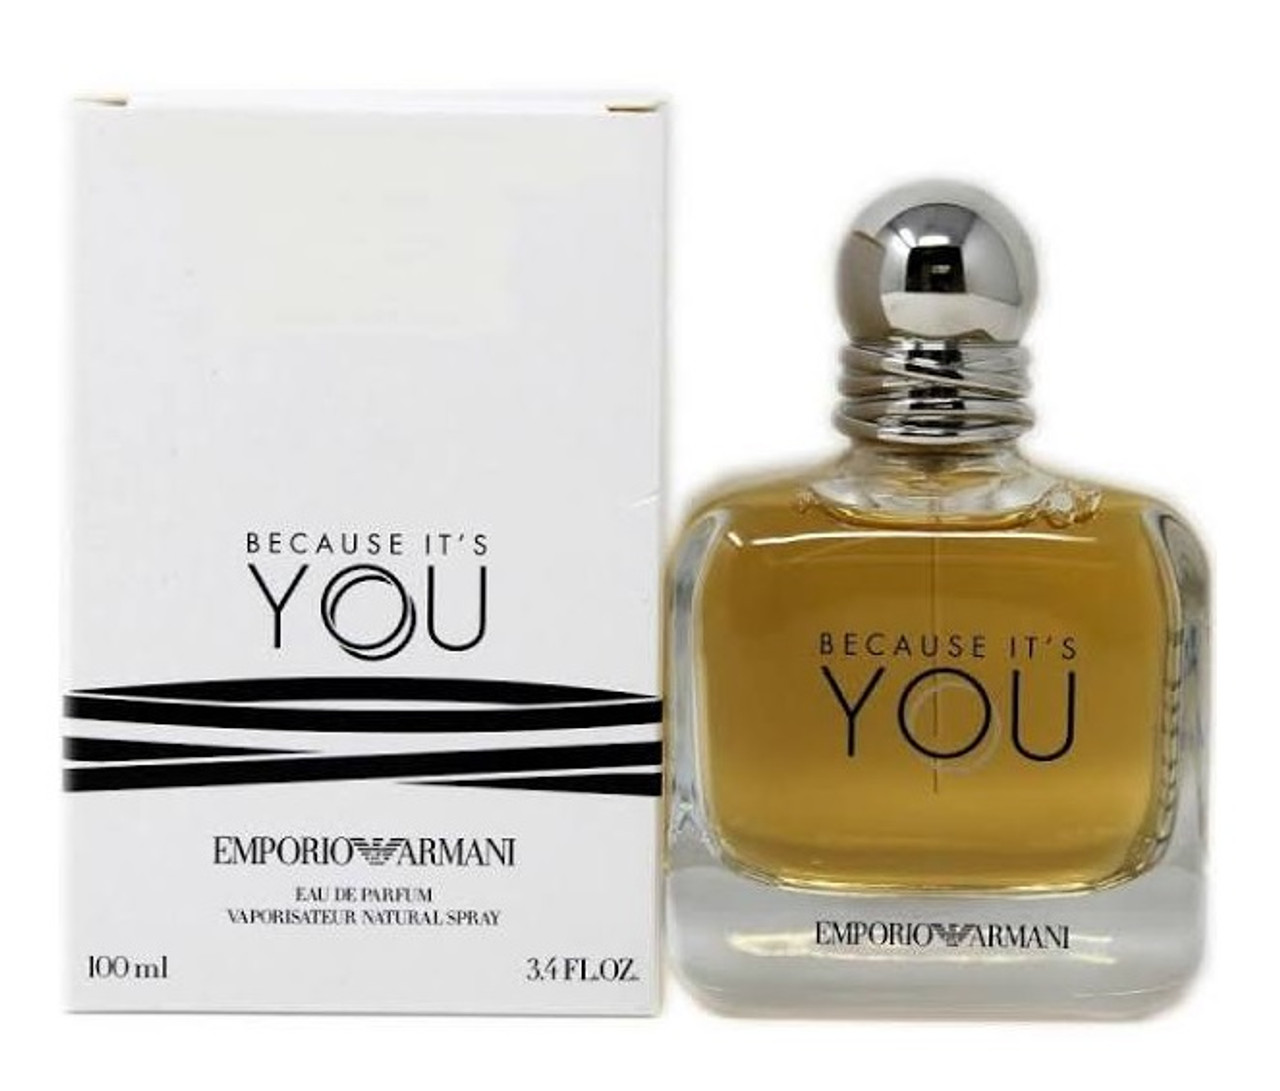 Emporio Armani by Giorgio Armani 3.4 oz Eau de Parfum Spray / Women